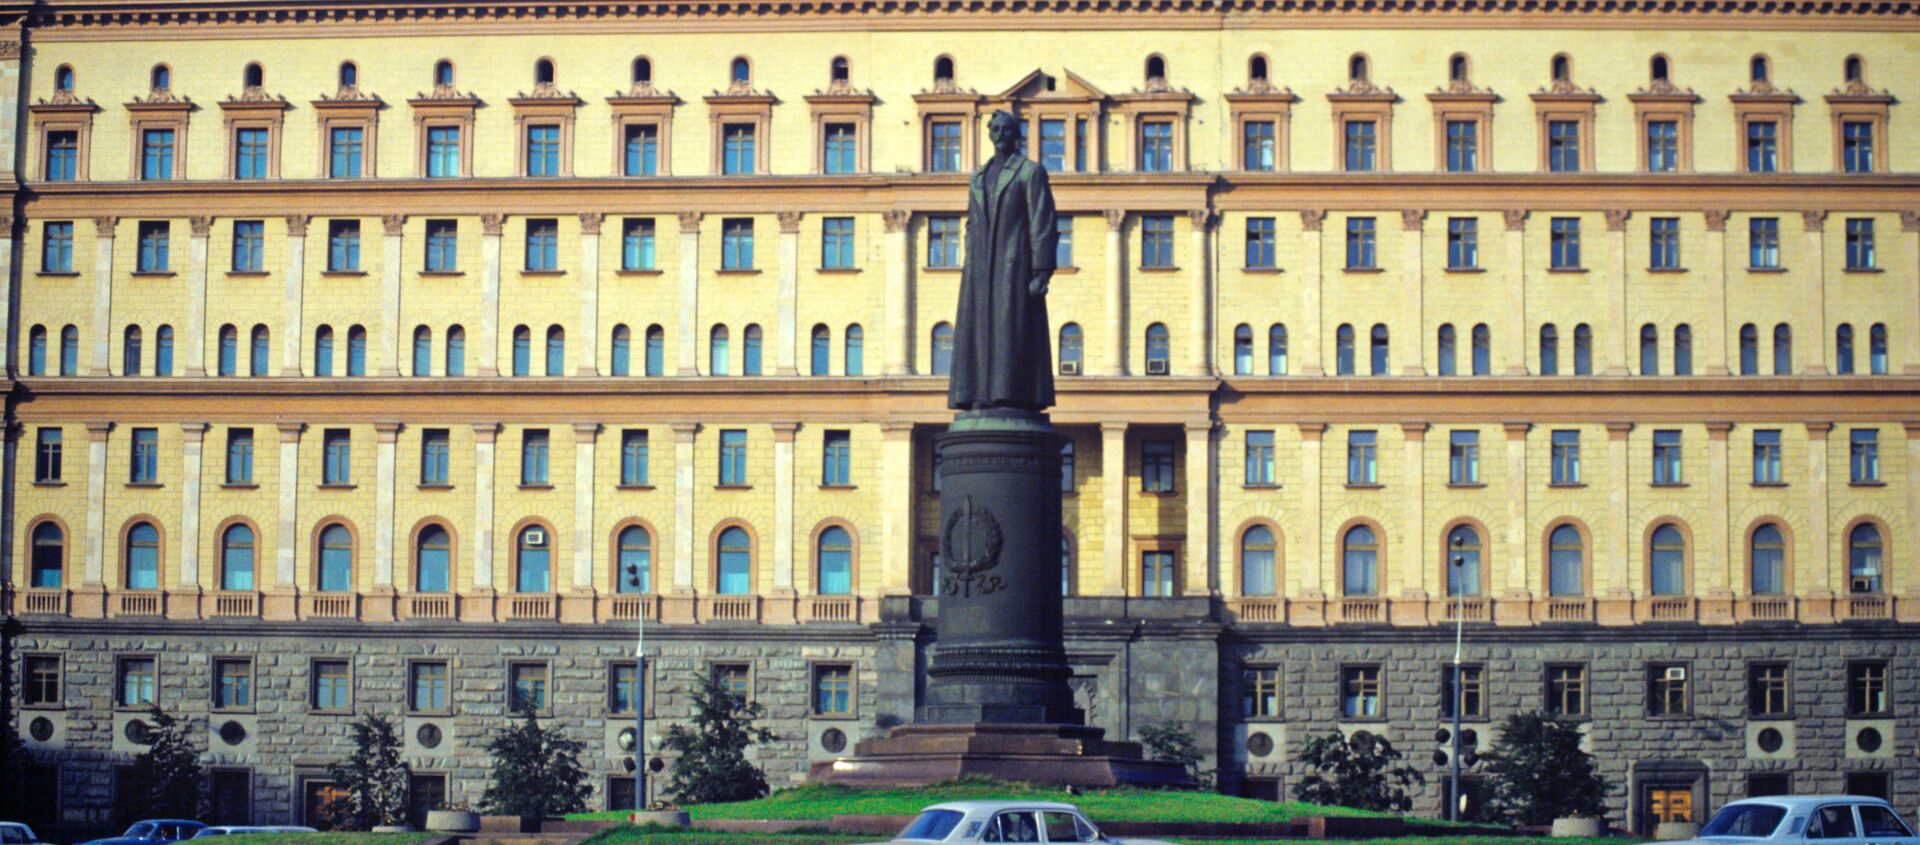 Zgrada Komiteta državne bezbednosti SSSR (KGB) u Moskvi - Sputnik Srbija, 1920, 14.02.2021